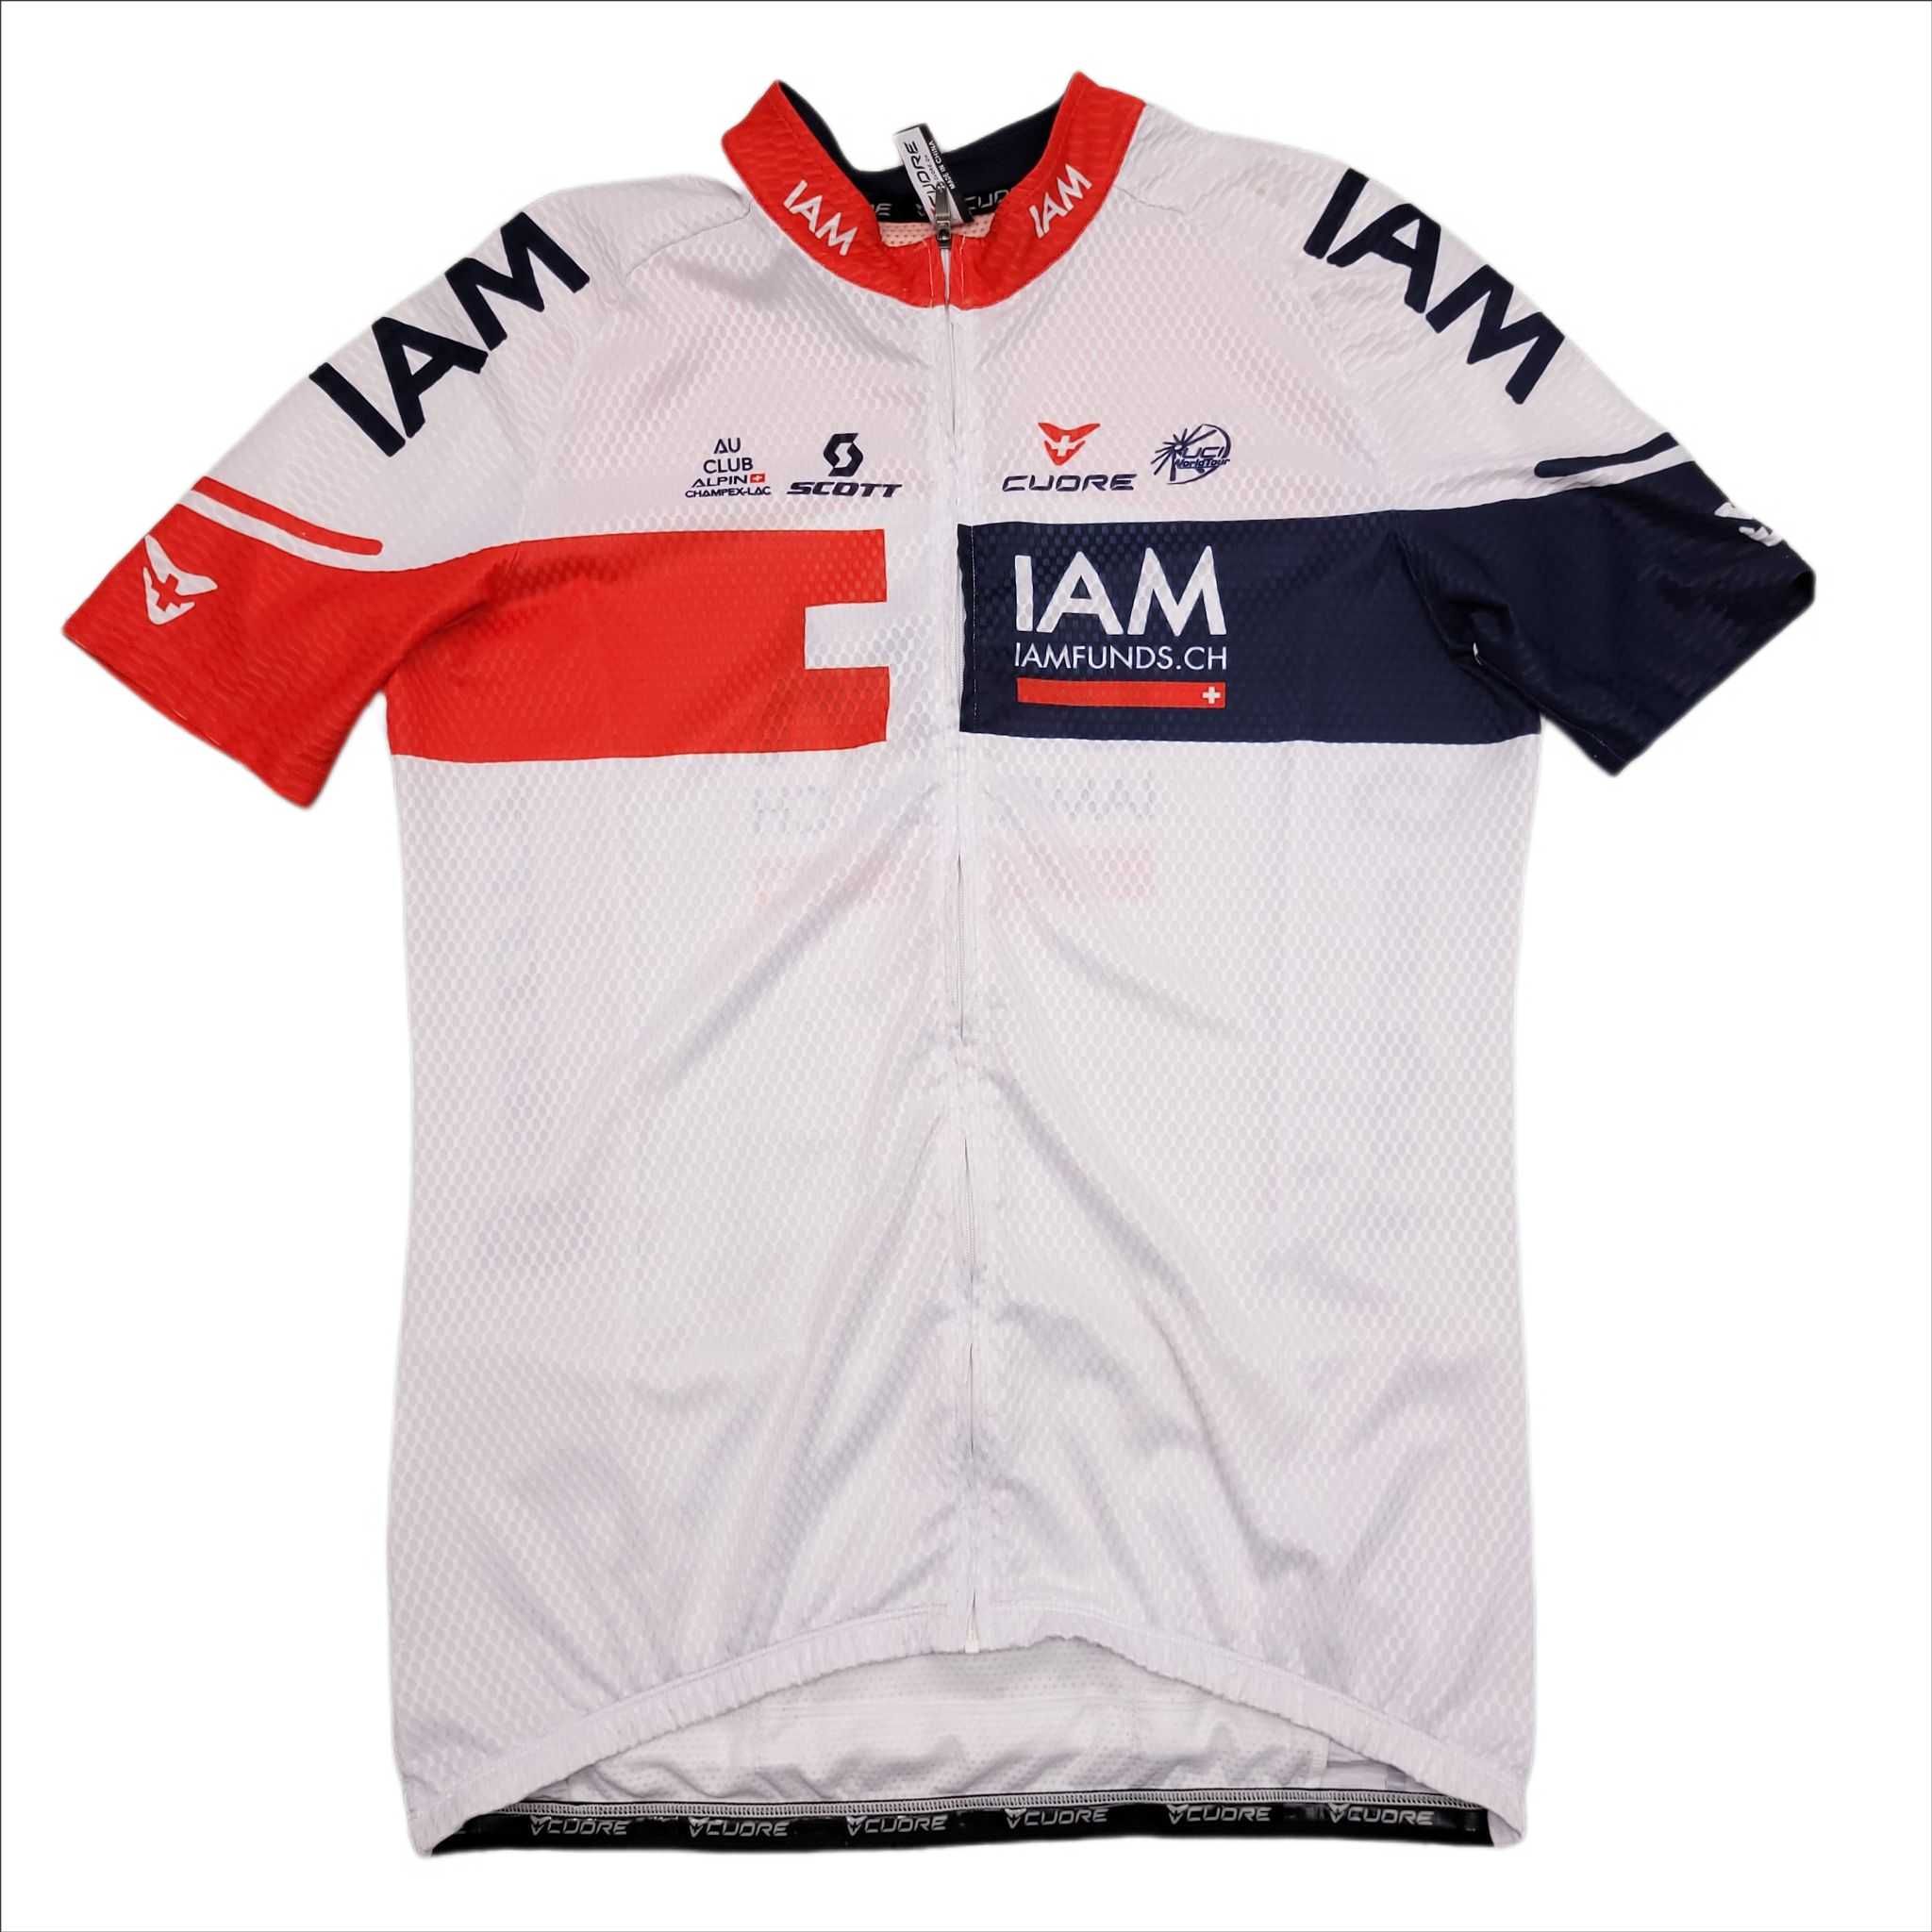 Cuore SCOTT Iam koszulka męska rowerowa iamfunds sportowa